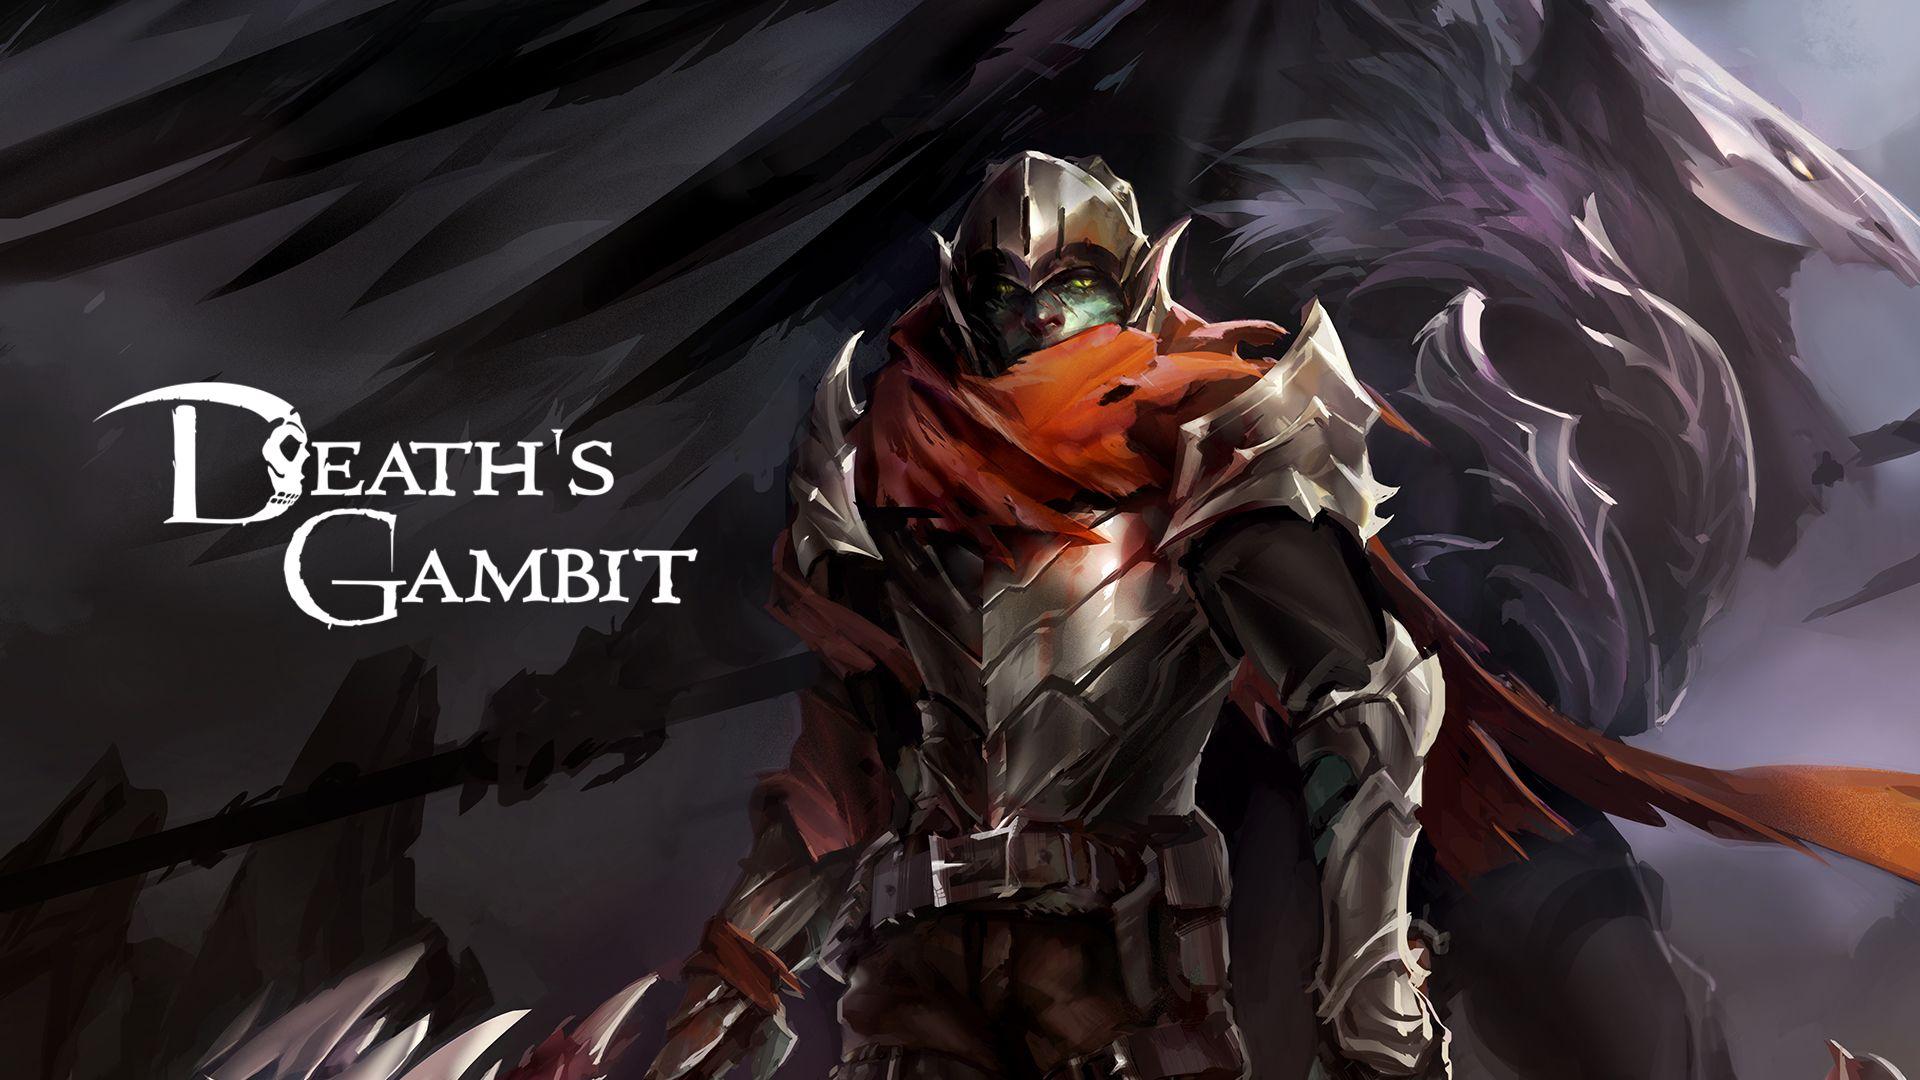 Deaths Gambit, HD Games, 4k Wallpaper, Image, Background, Photo